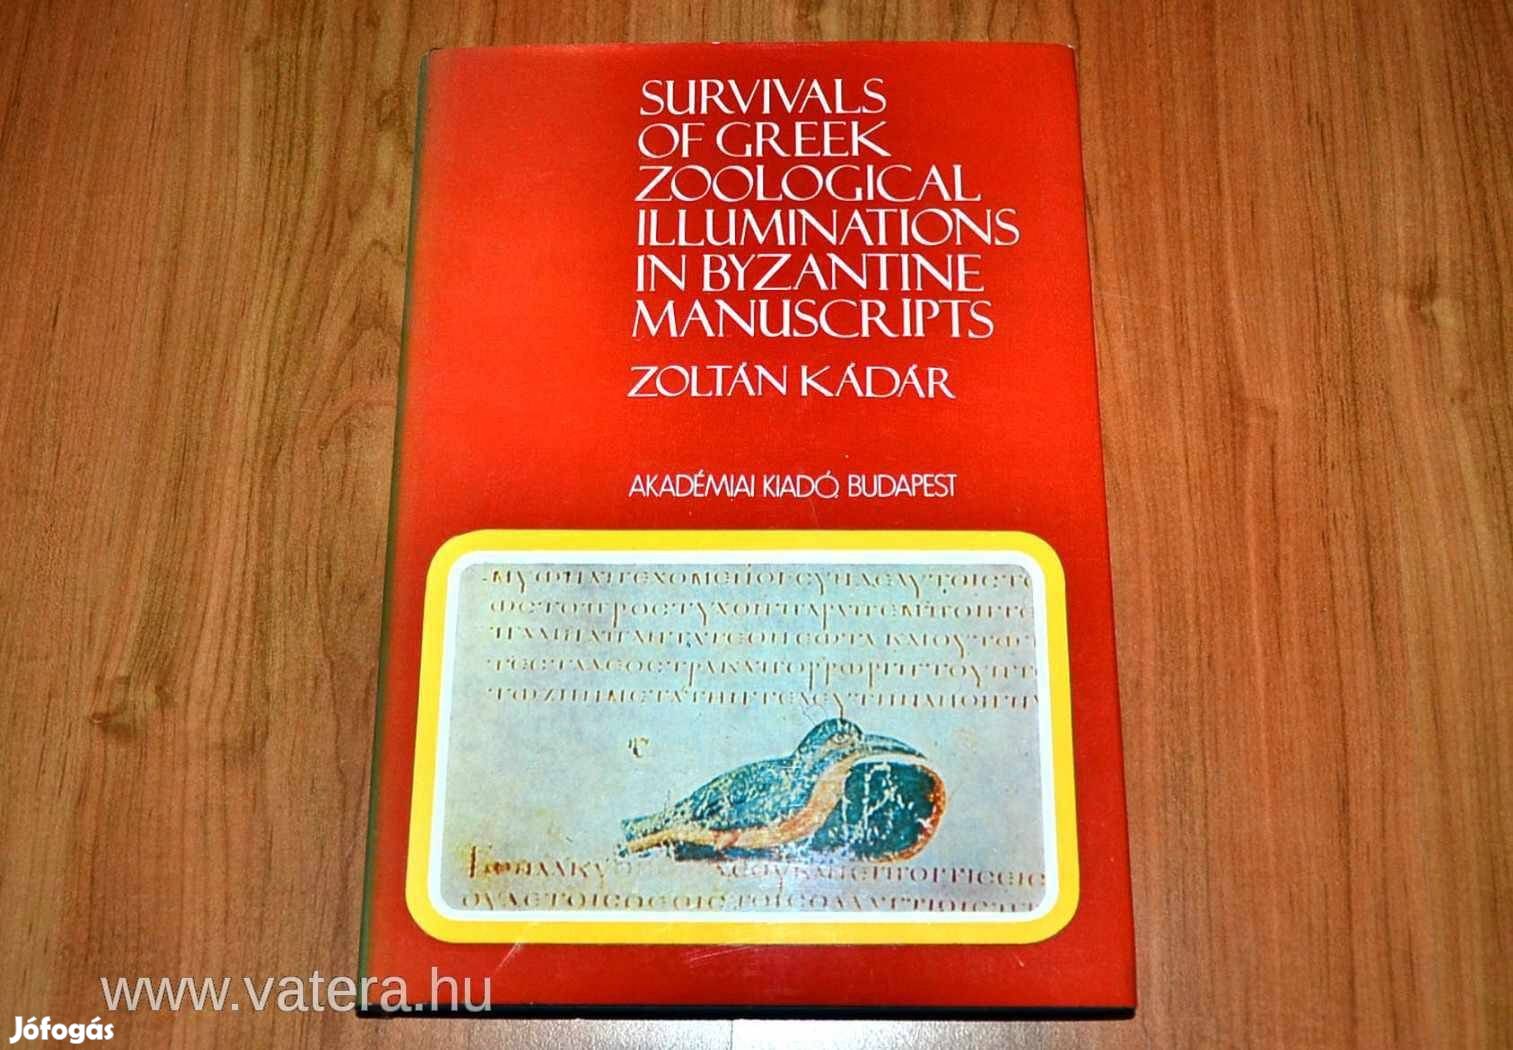 Kódex Survivals of Greek zoological illuminations- hasonmás fakszimile